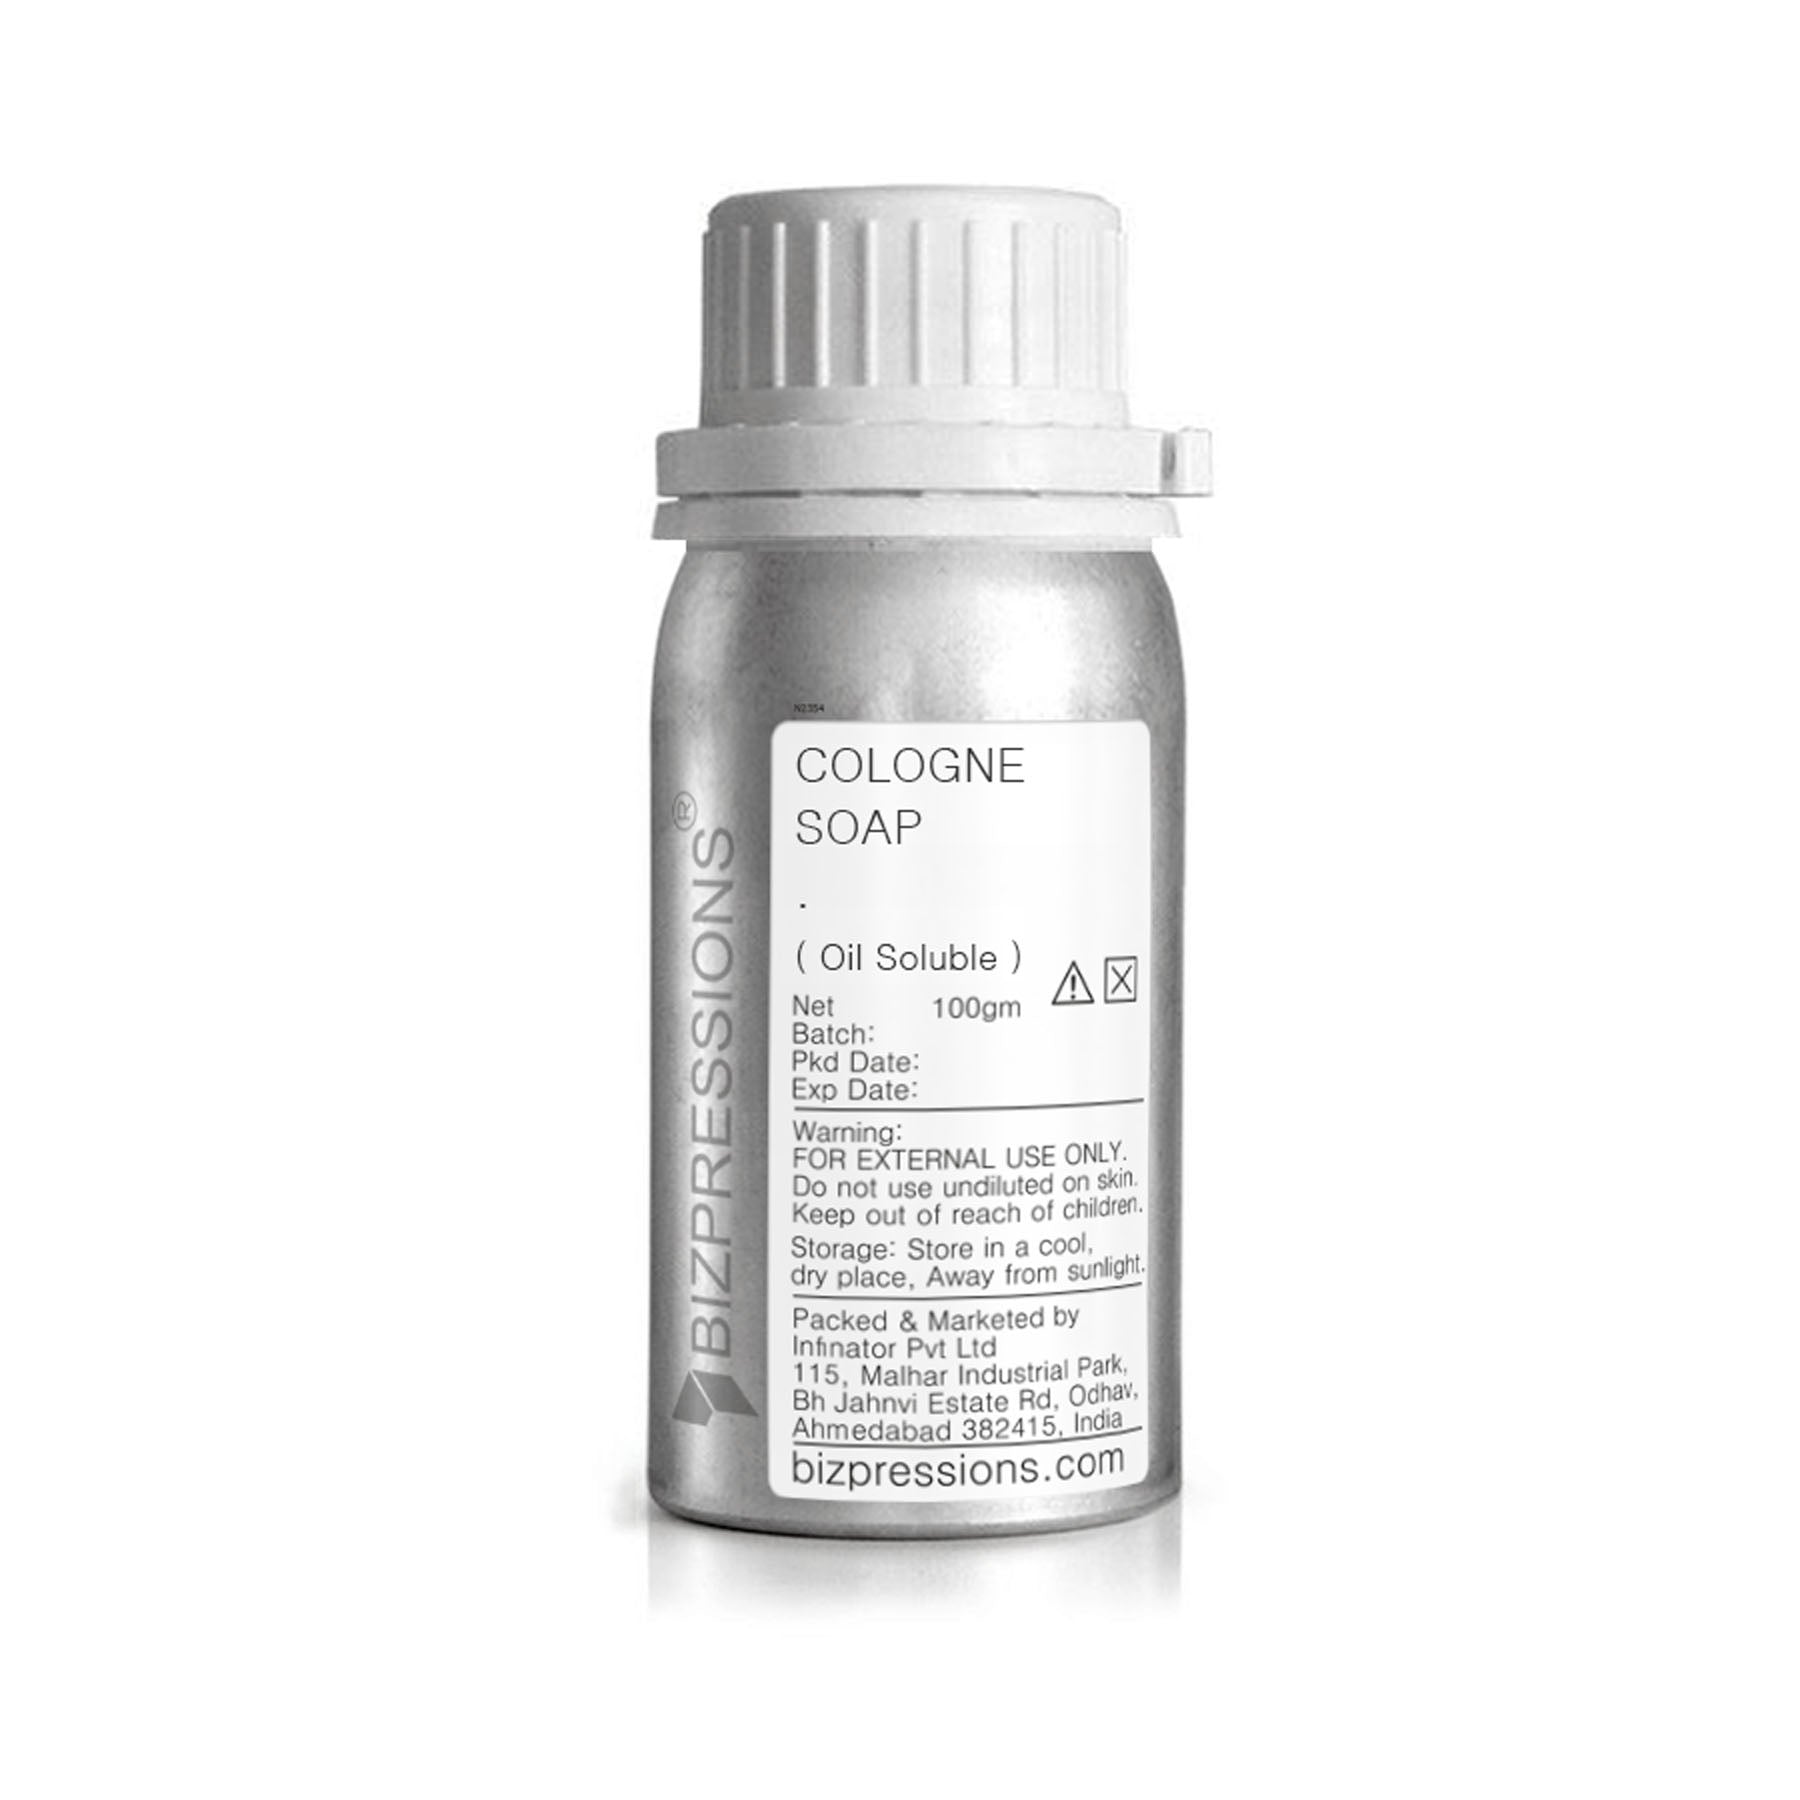 COLOGNE SOAP- Fragrance ( Oil Soluble ) - 100 gm